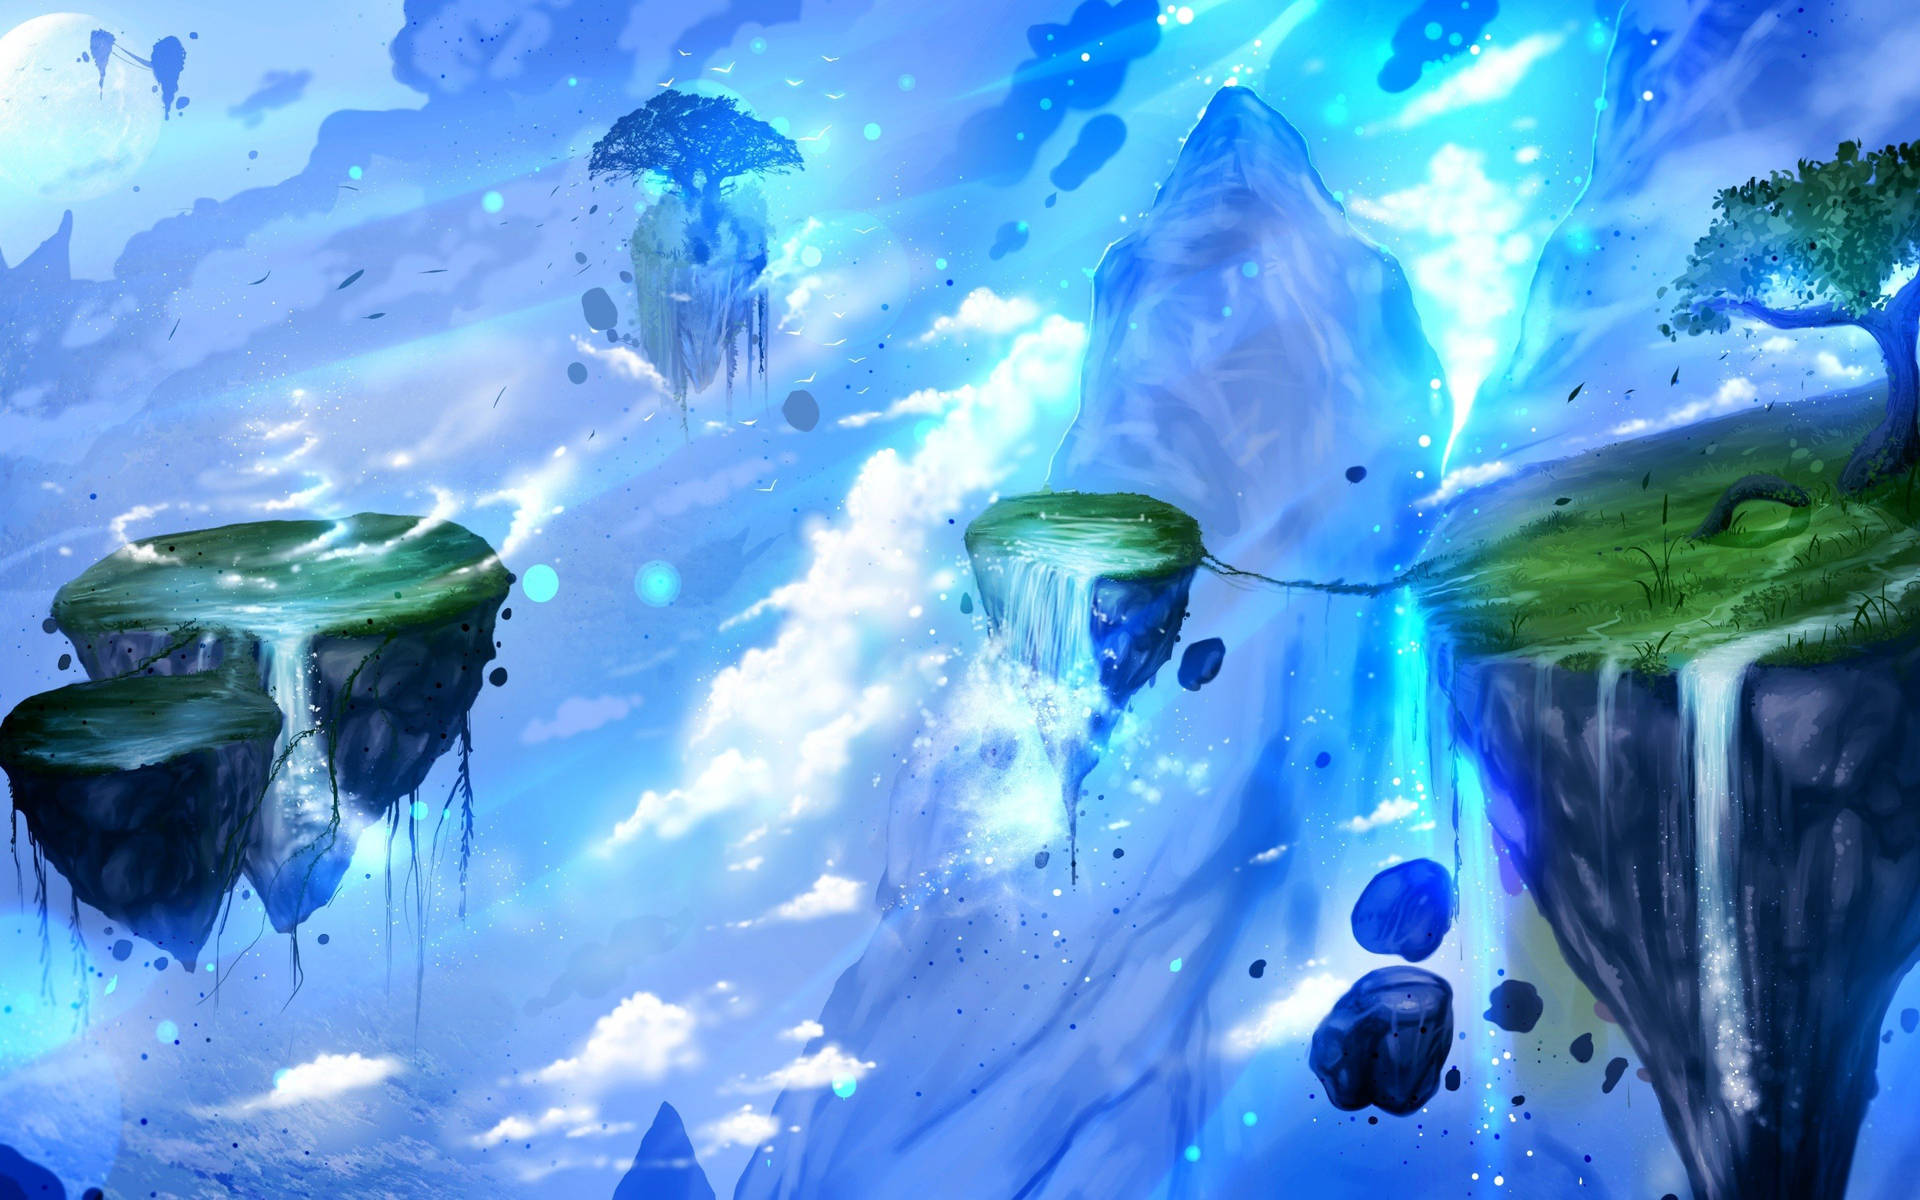 Fantasy Islands In Translucent Blue Light